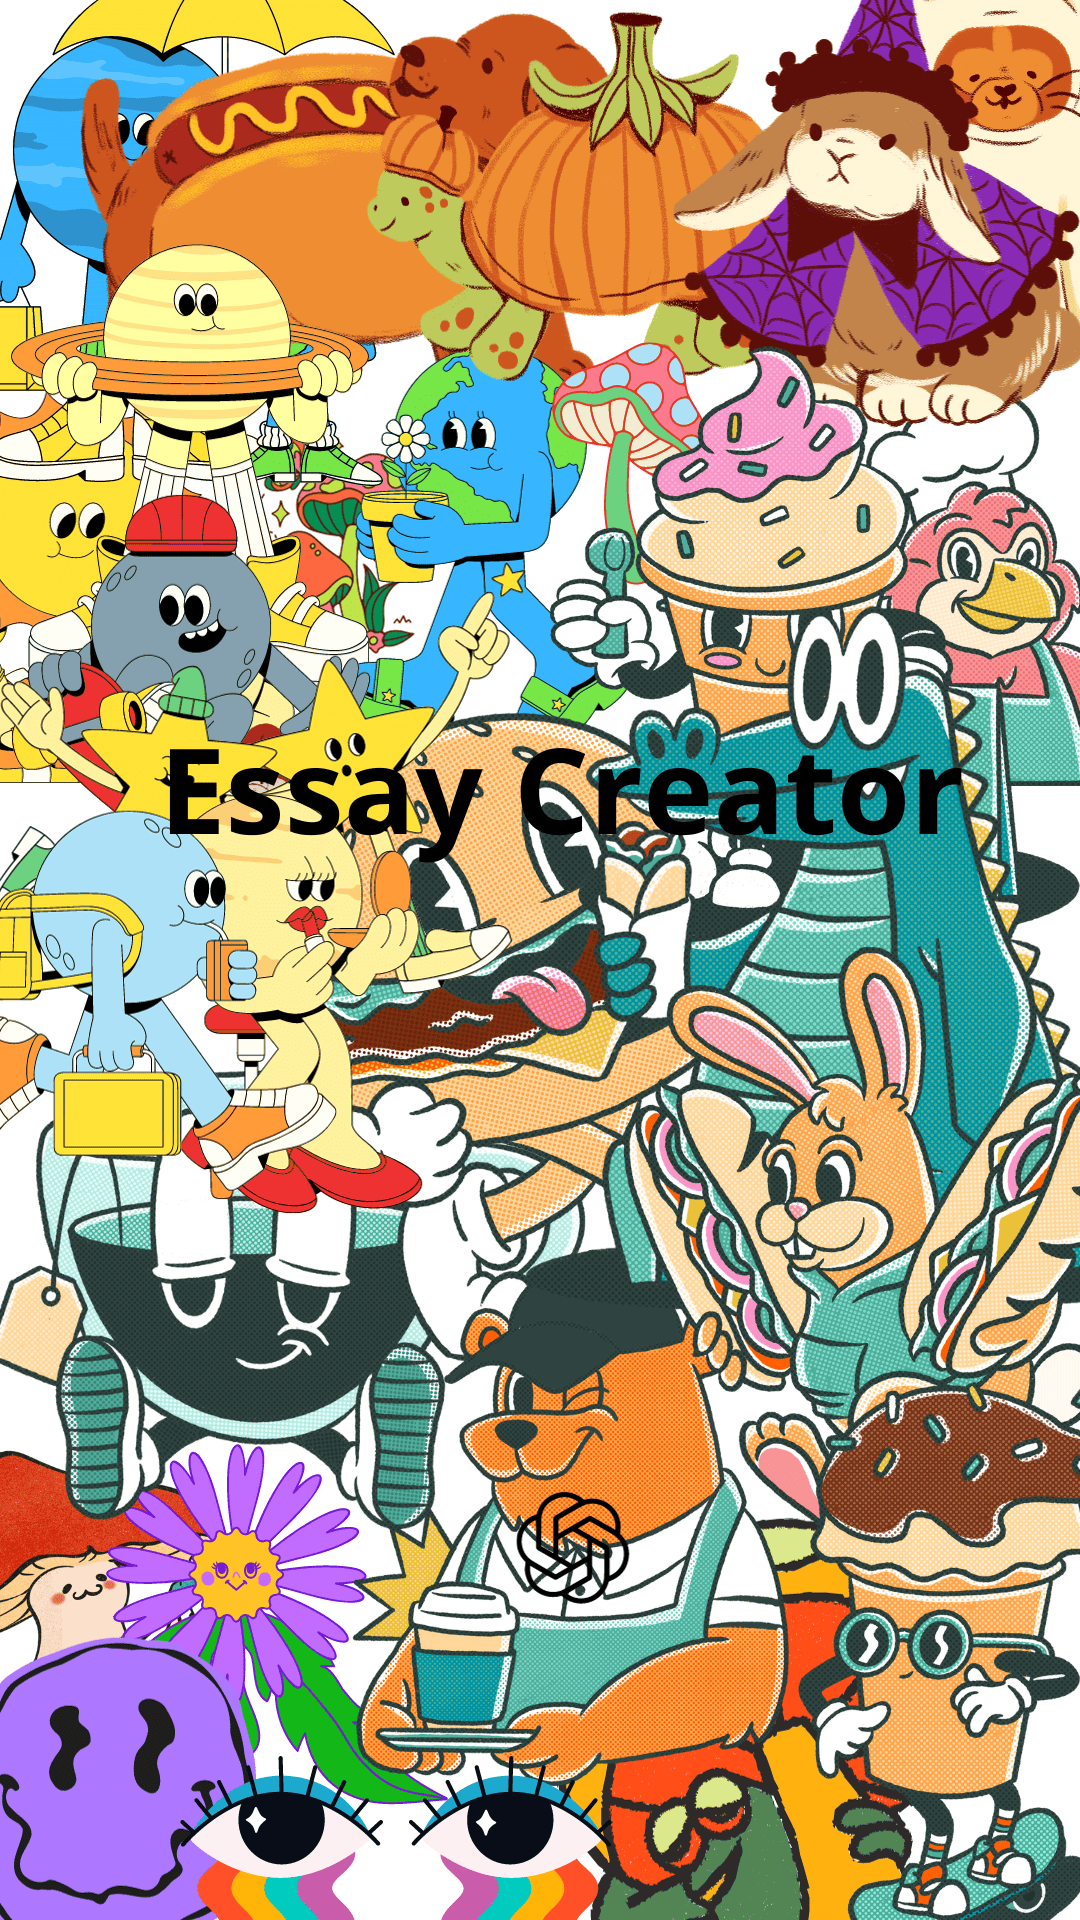 Essay Creator: Think we create